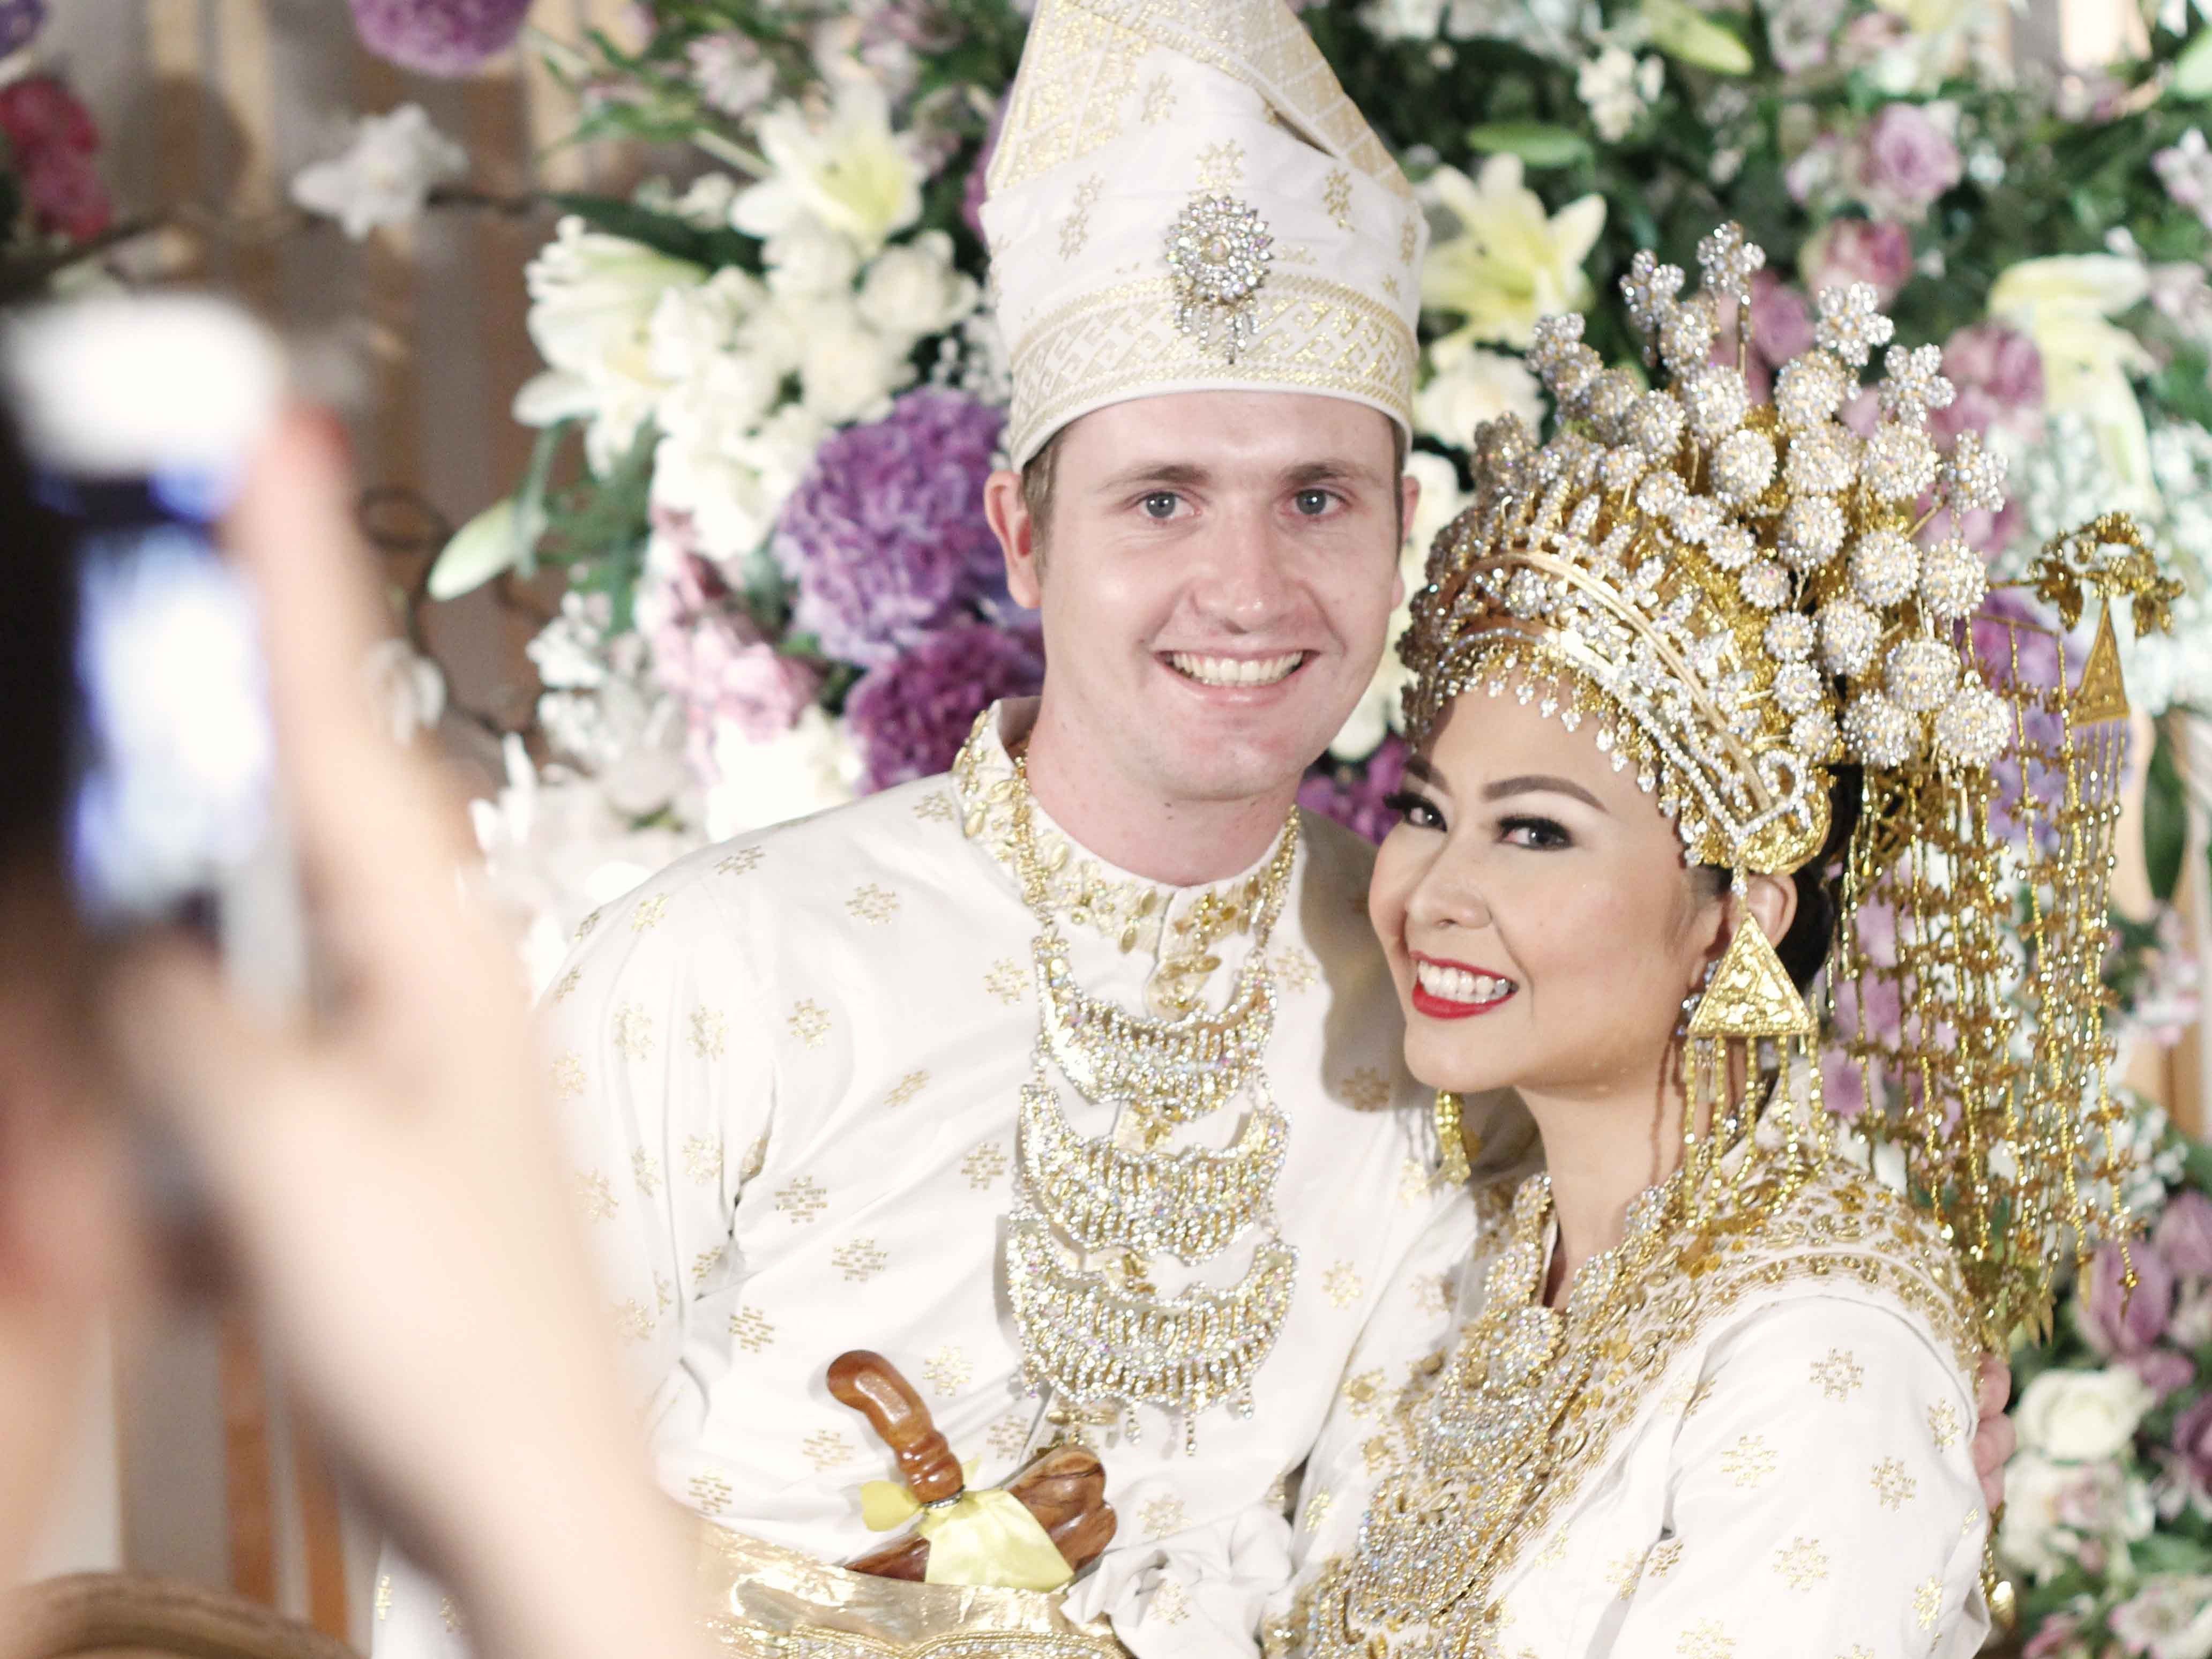 Inilah Persiapan Pernikahan Adat Melayu-Riau - Soehanna Hall